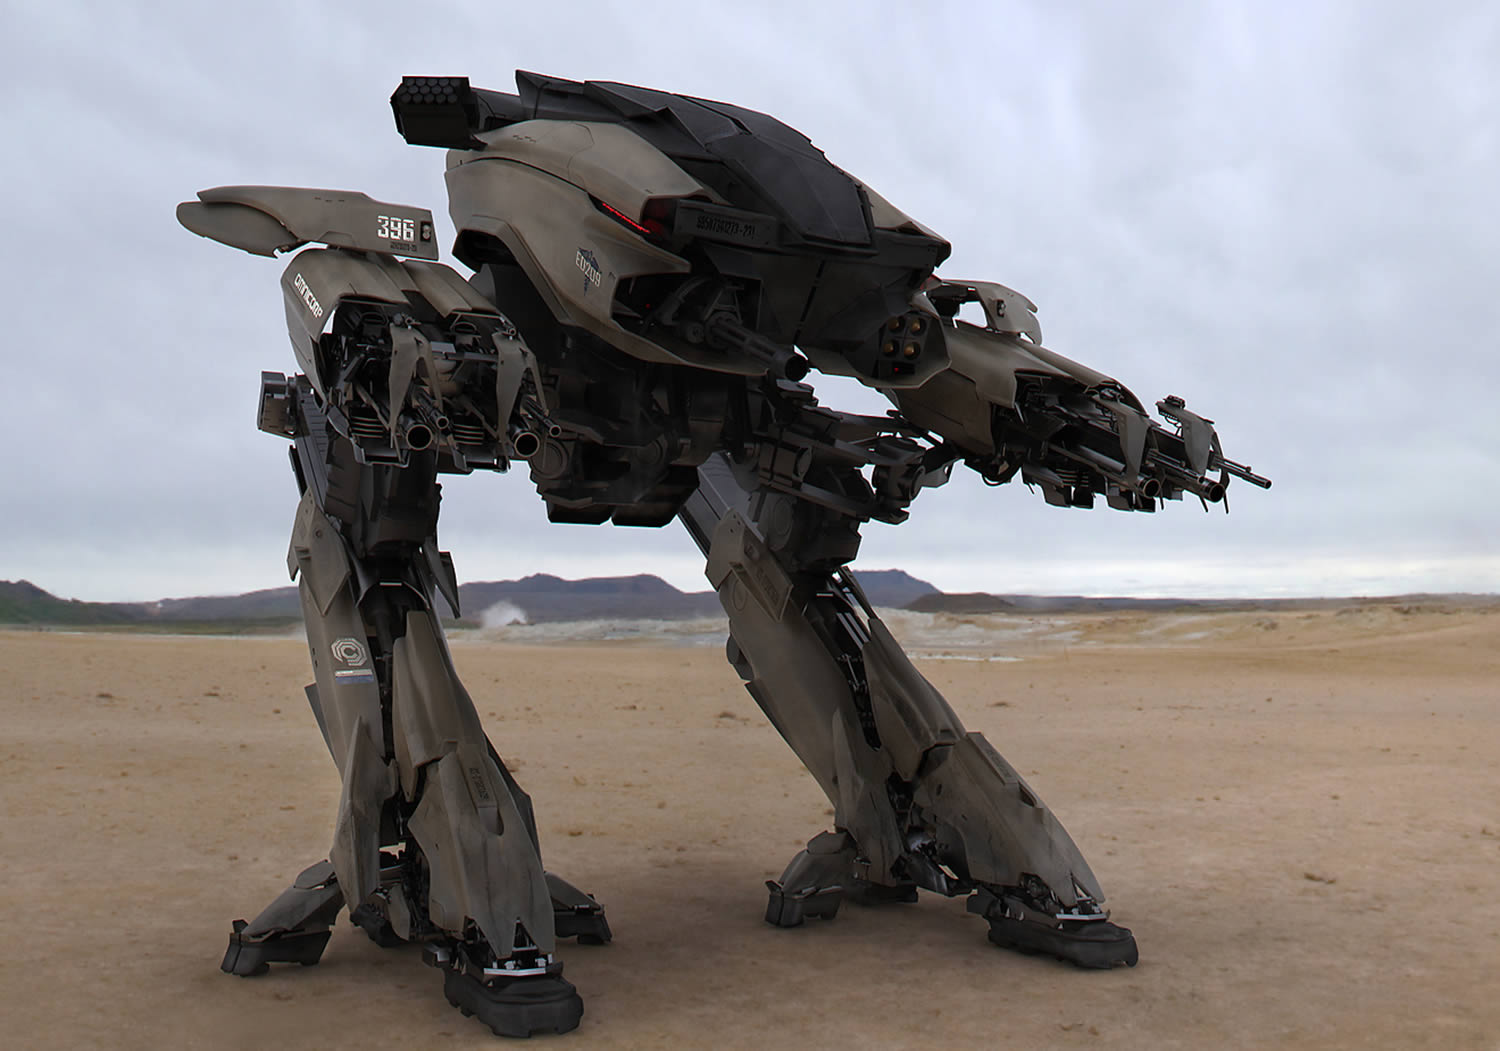 ED-209 - Robocop